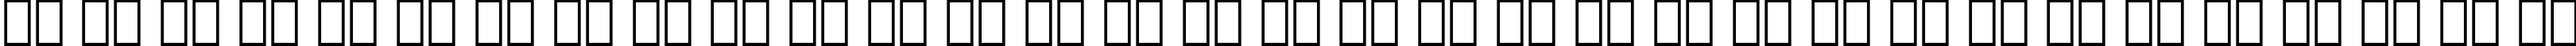 Пример написания русского алфавита шрифтом Geometric 415 Lite Italic BT